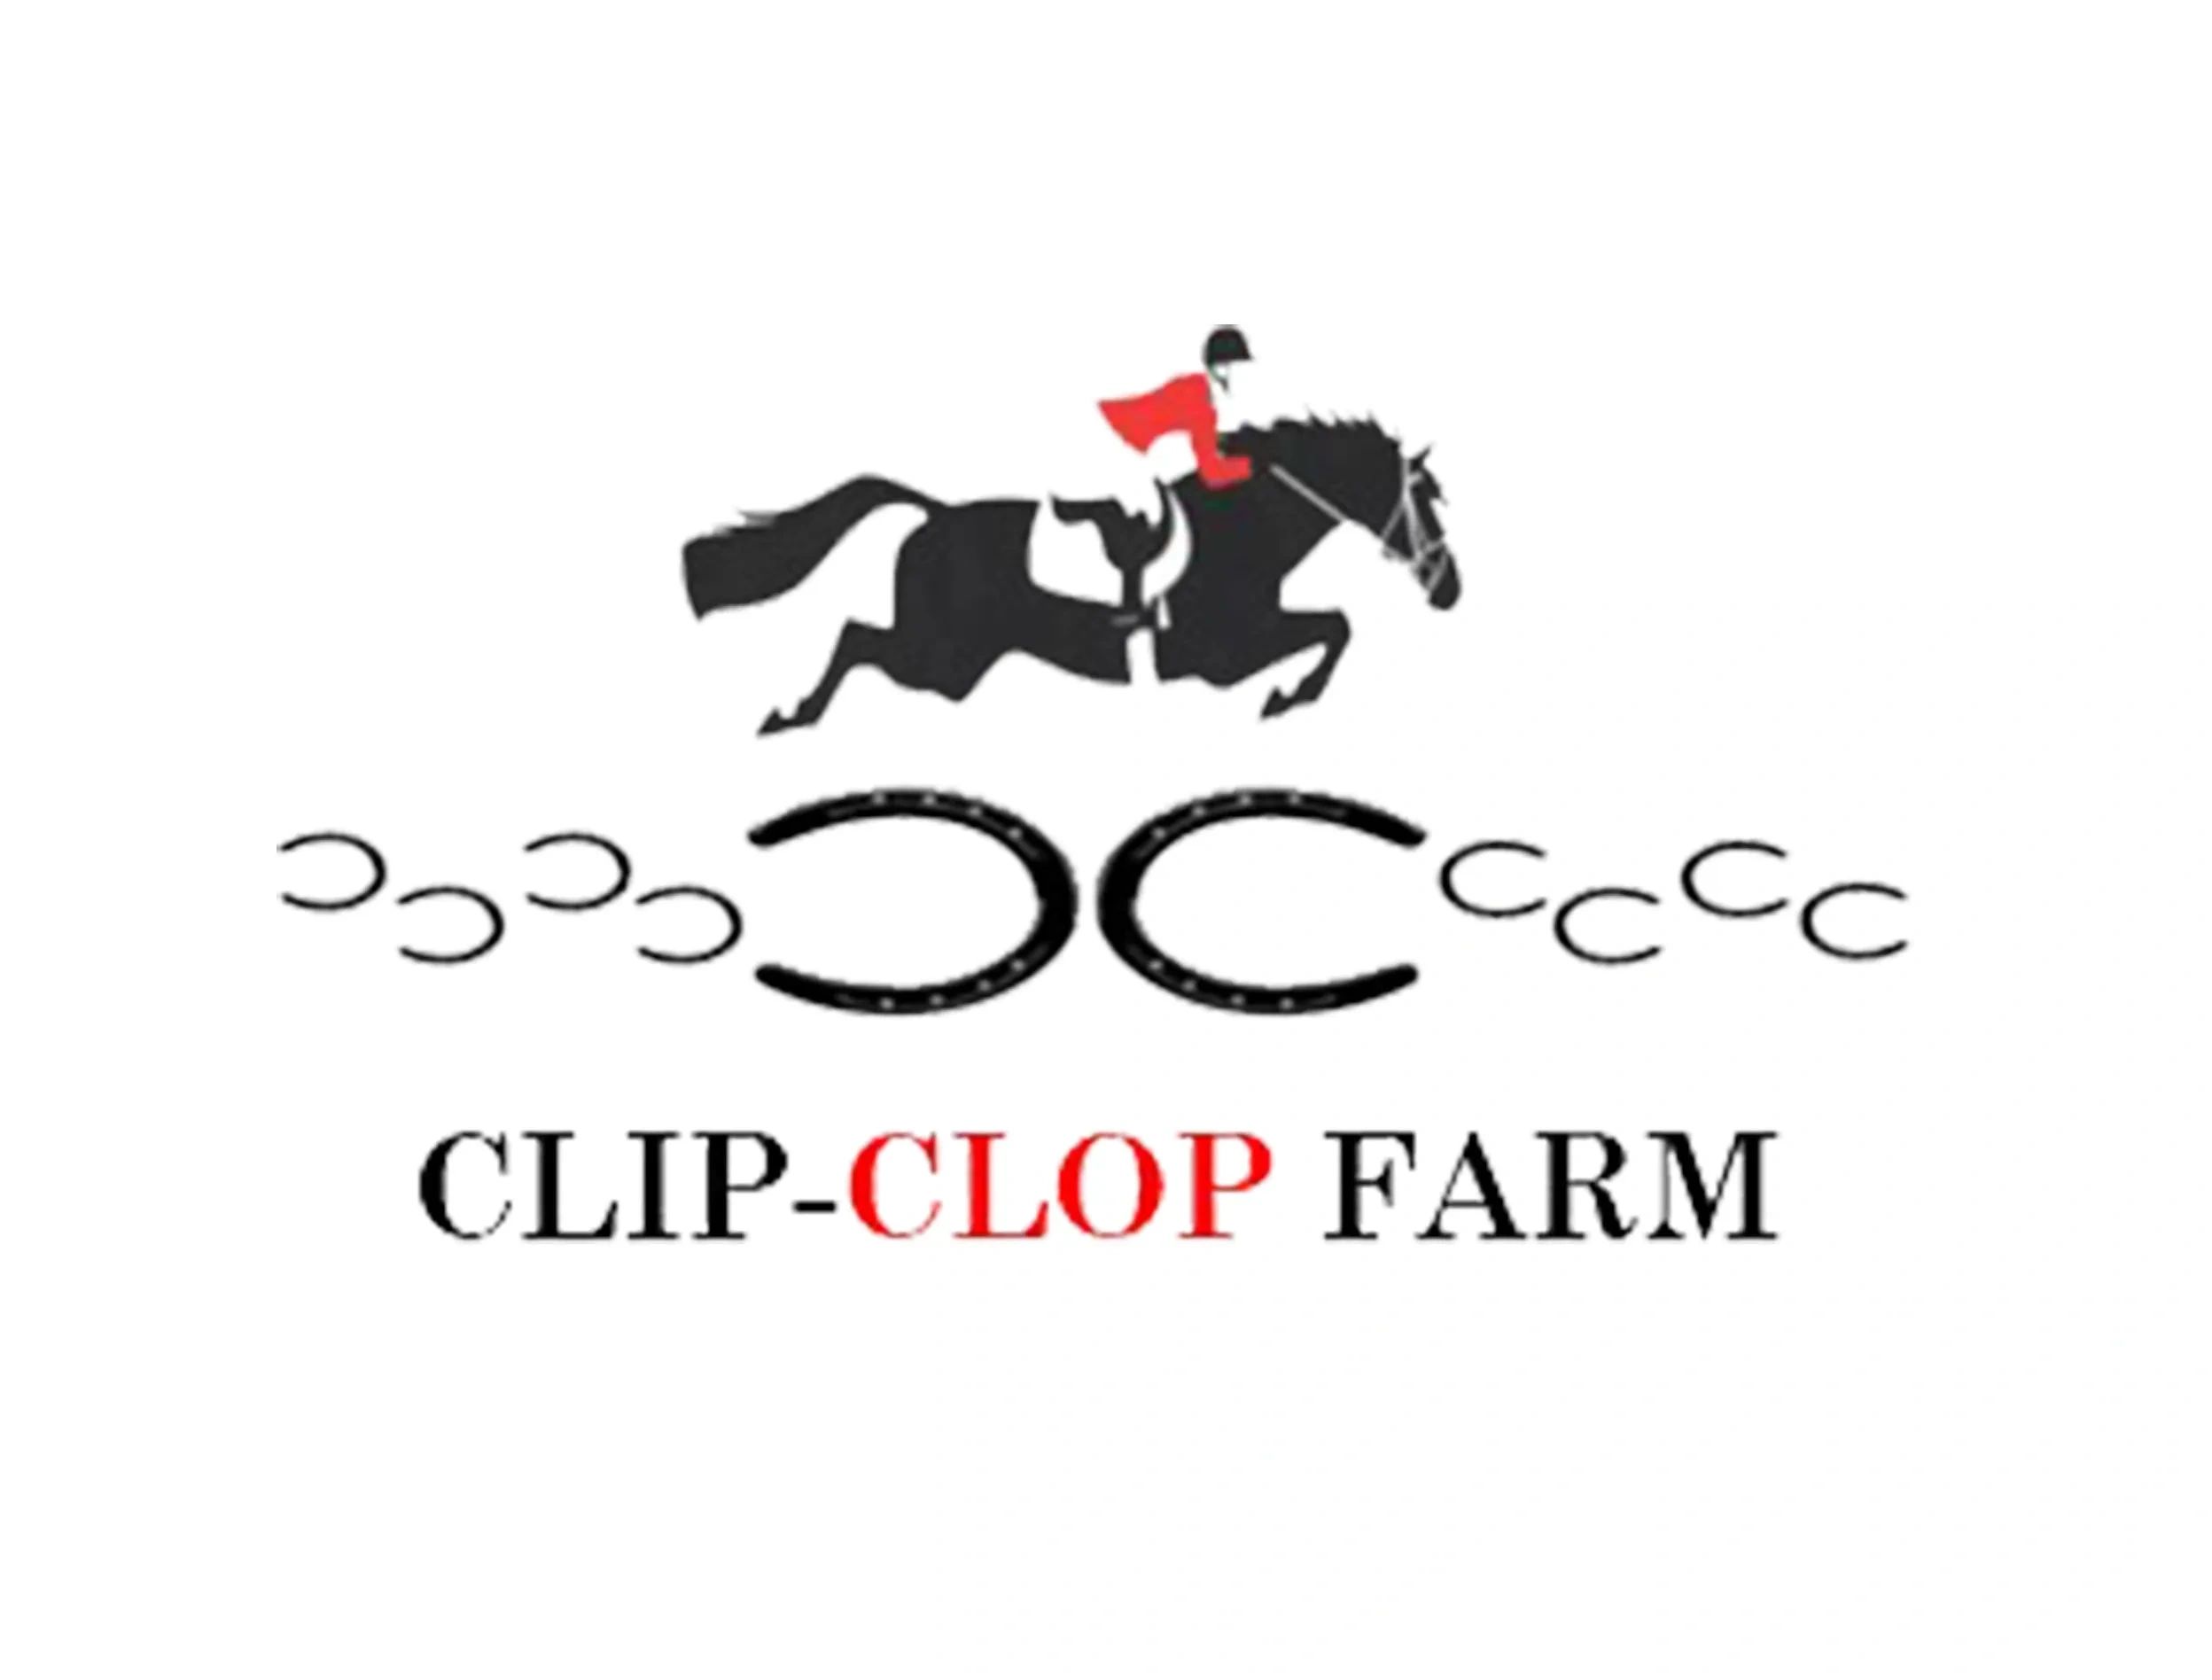 Clip-Clop Farm - Home